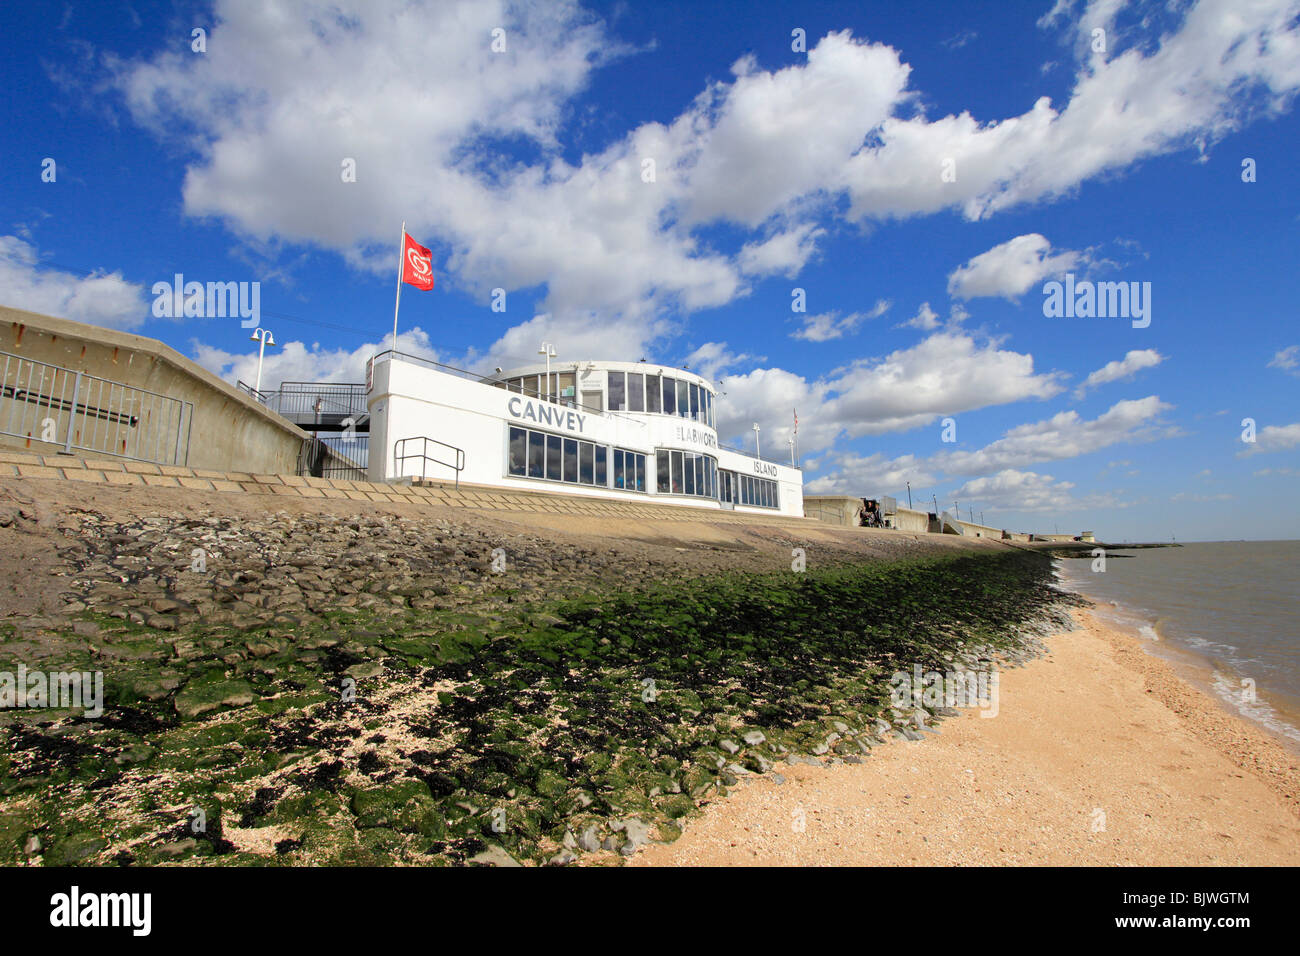 Labworth Café Canvey Island Fluss Themse-Mündung England uk gb Stockfoto